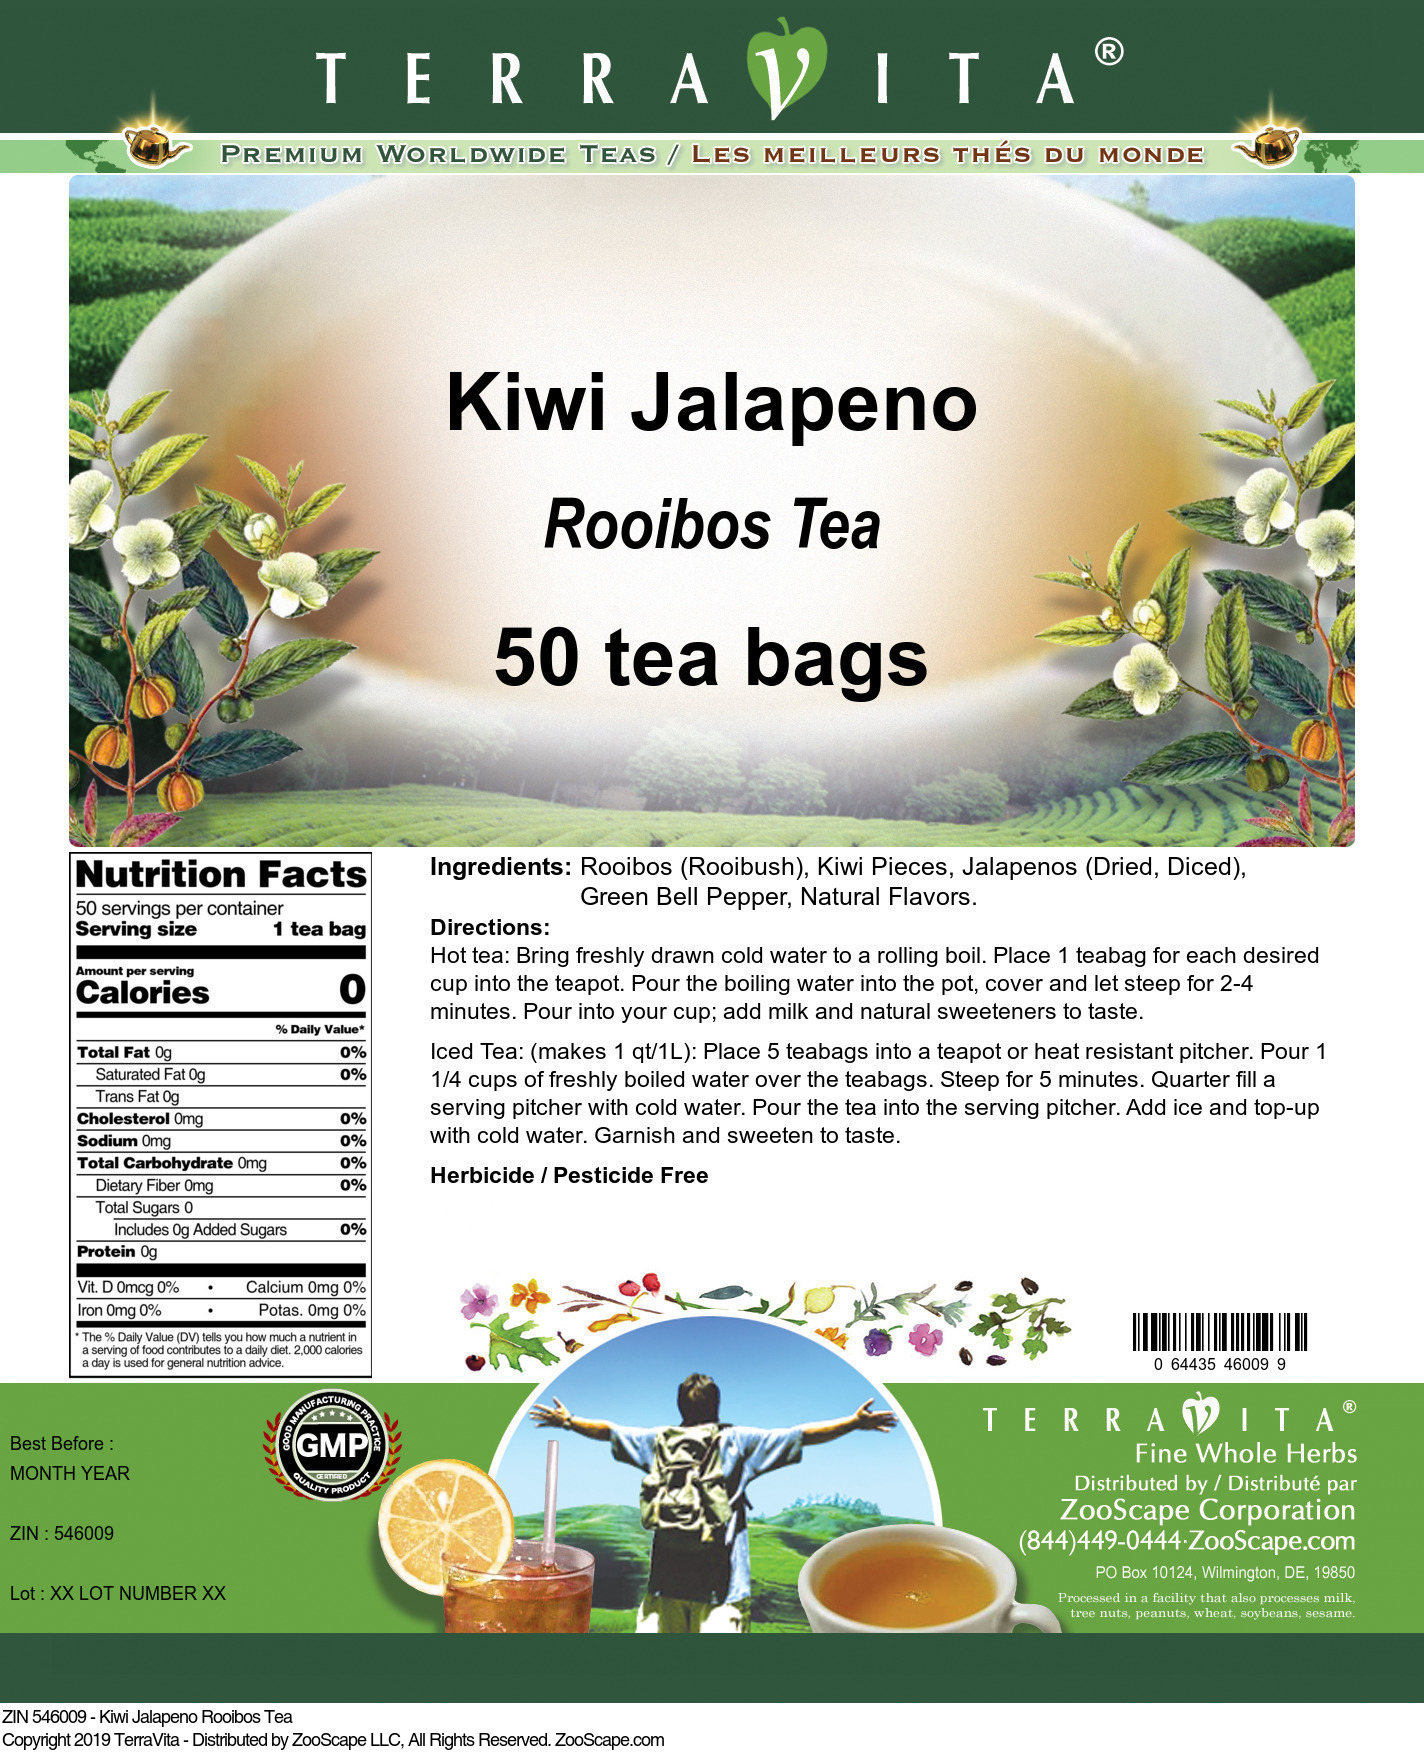 Kiwi Jalapeno Rooibos Tea - Label